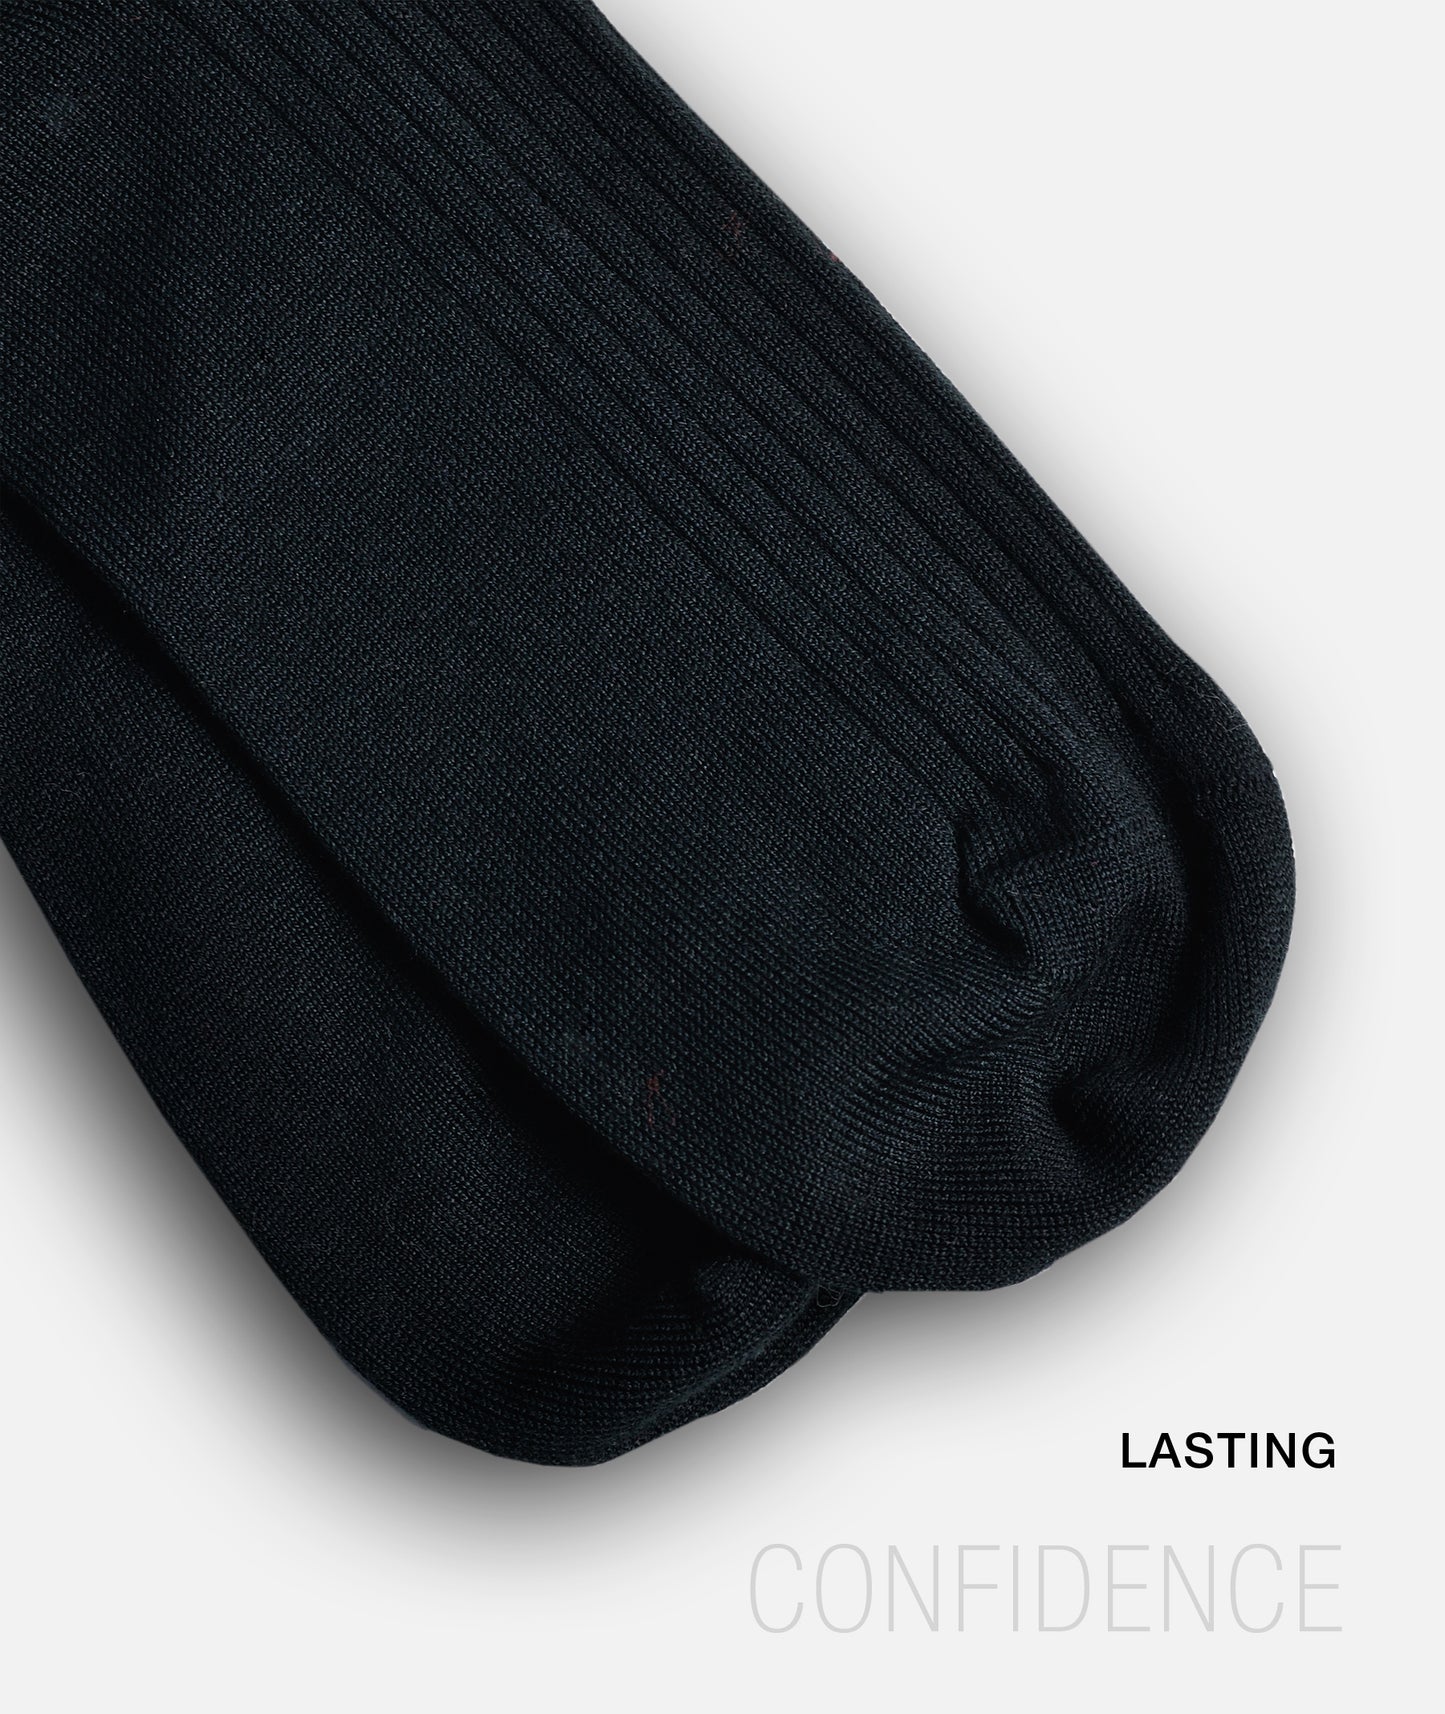 L.Martin Pima Cotton Over the Calf Dress Socks - 100% Cotton Interface - Black - 3Pair